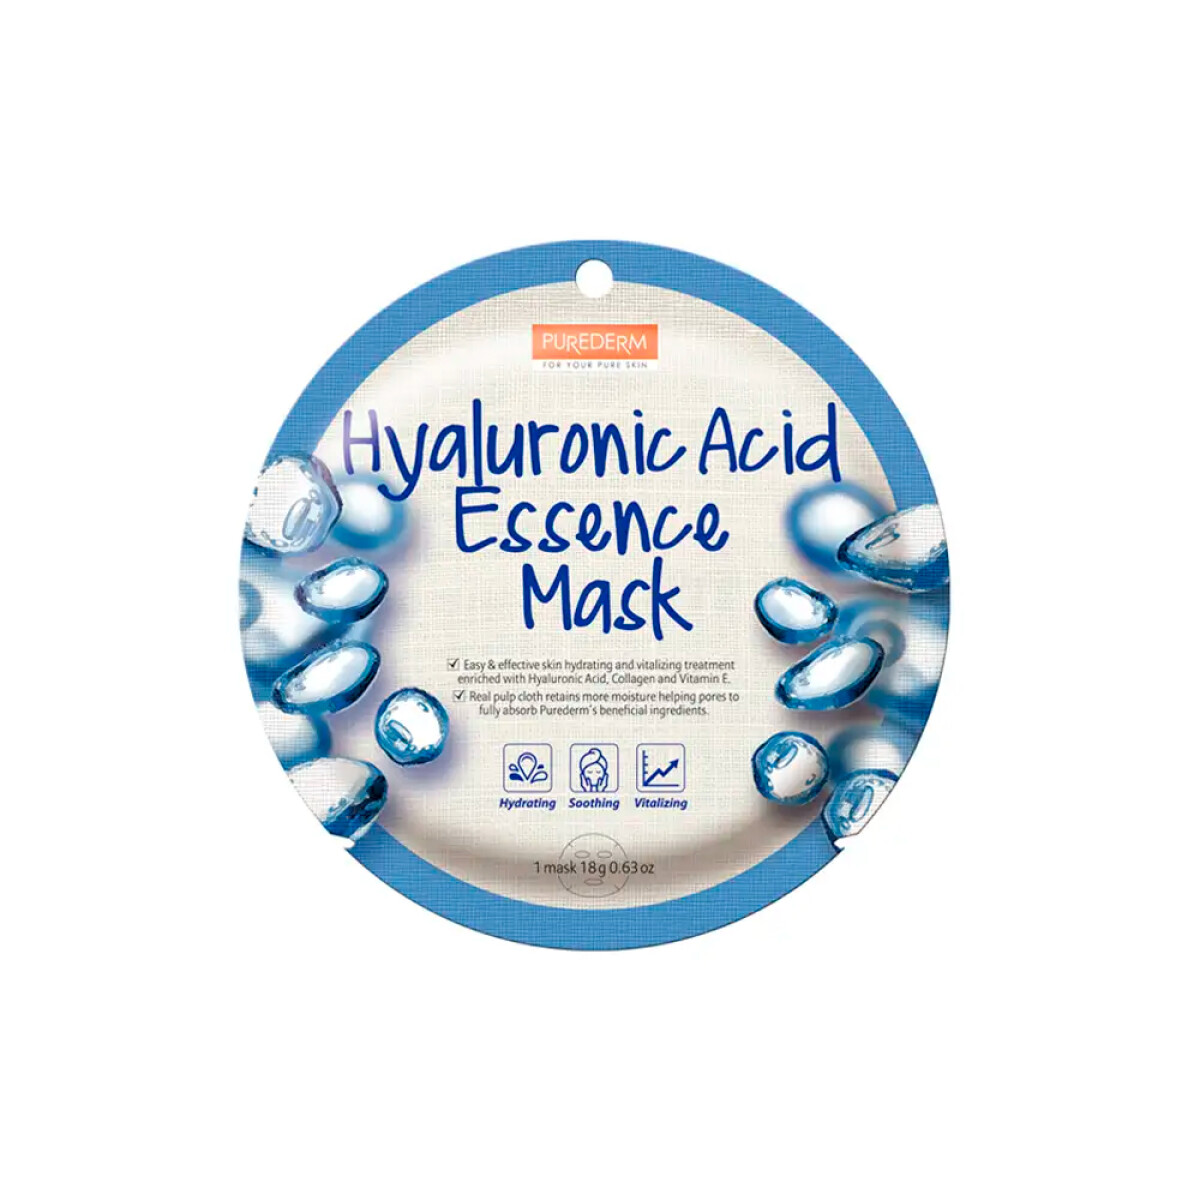 Purederm Hyaluronic Acid Essence Mask 